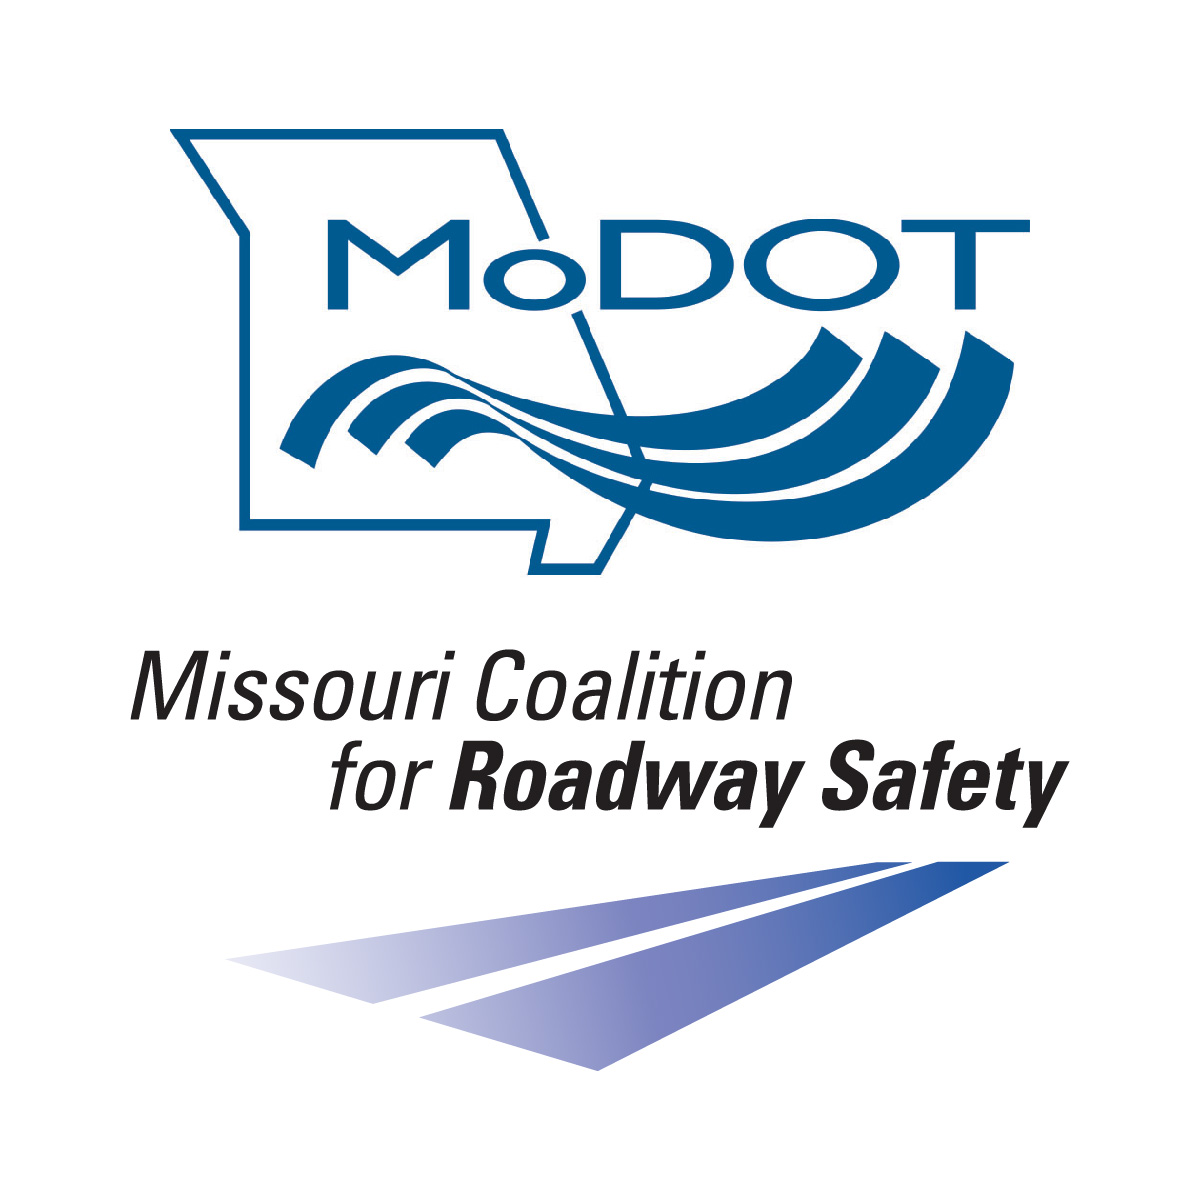 MoDOT logo and Missouri Coalition for Roadway Safety logo